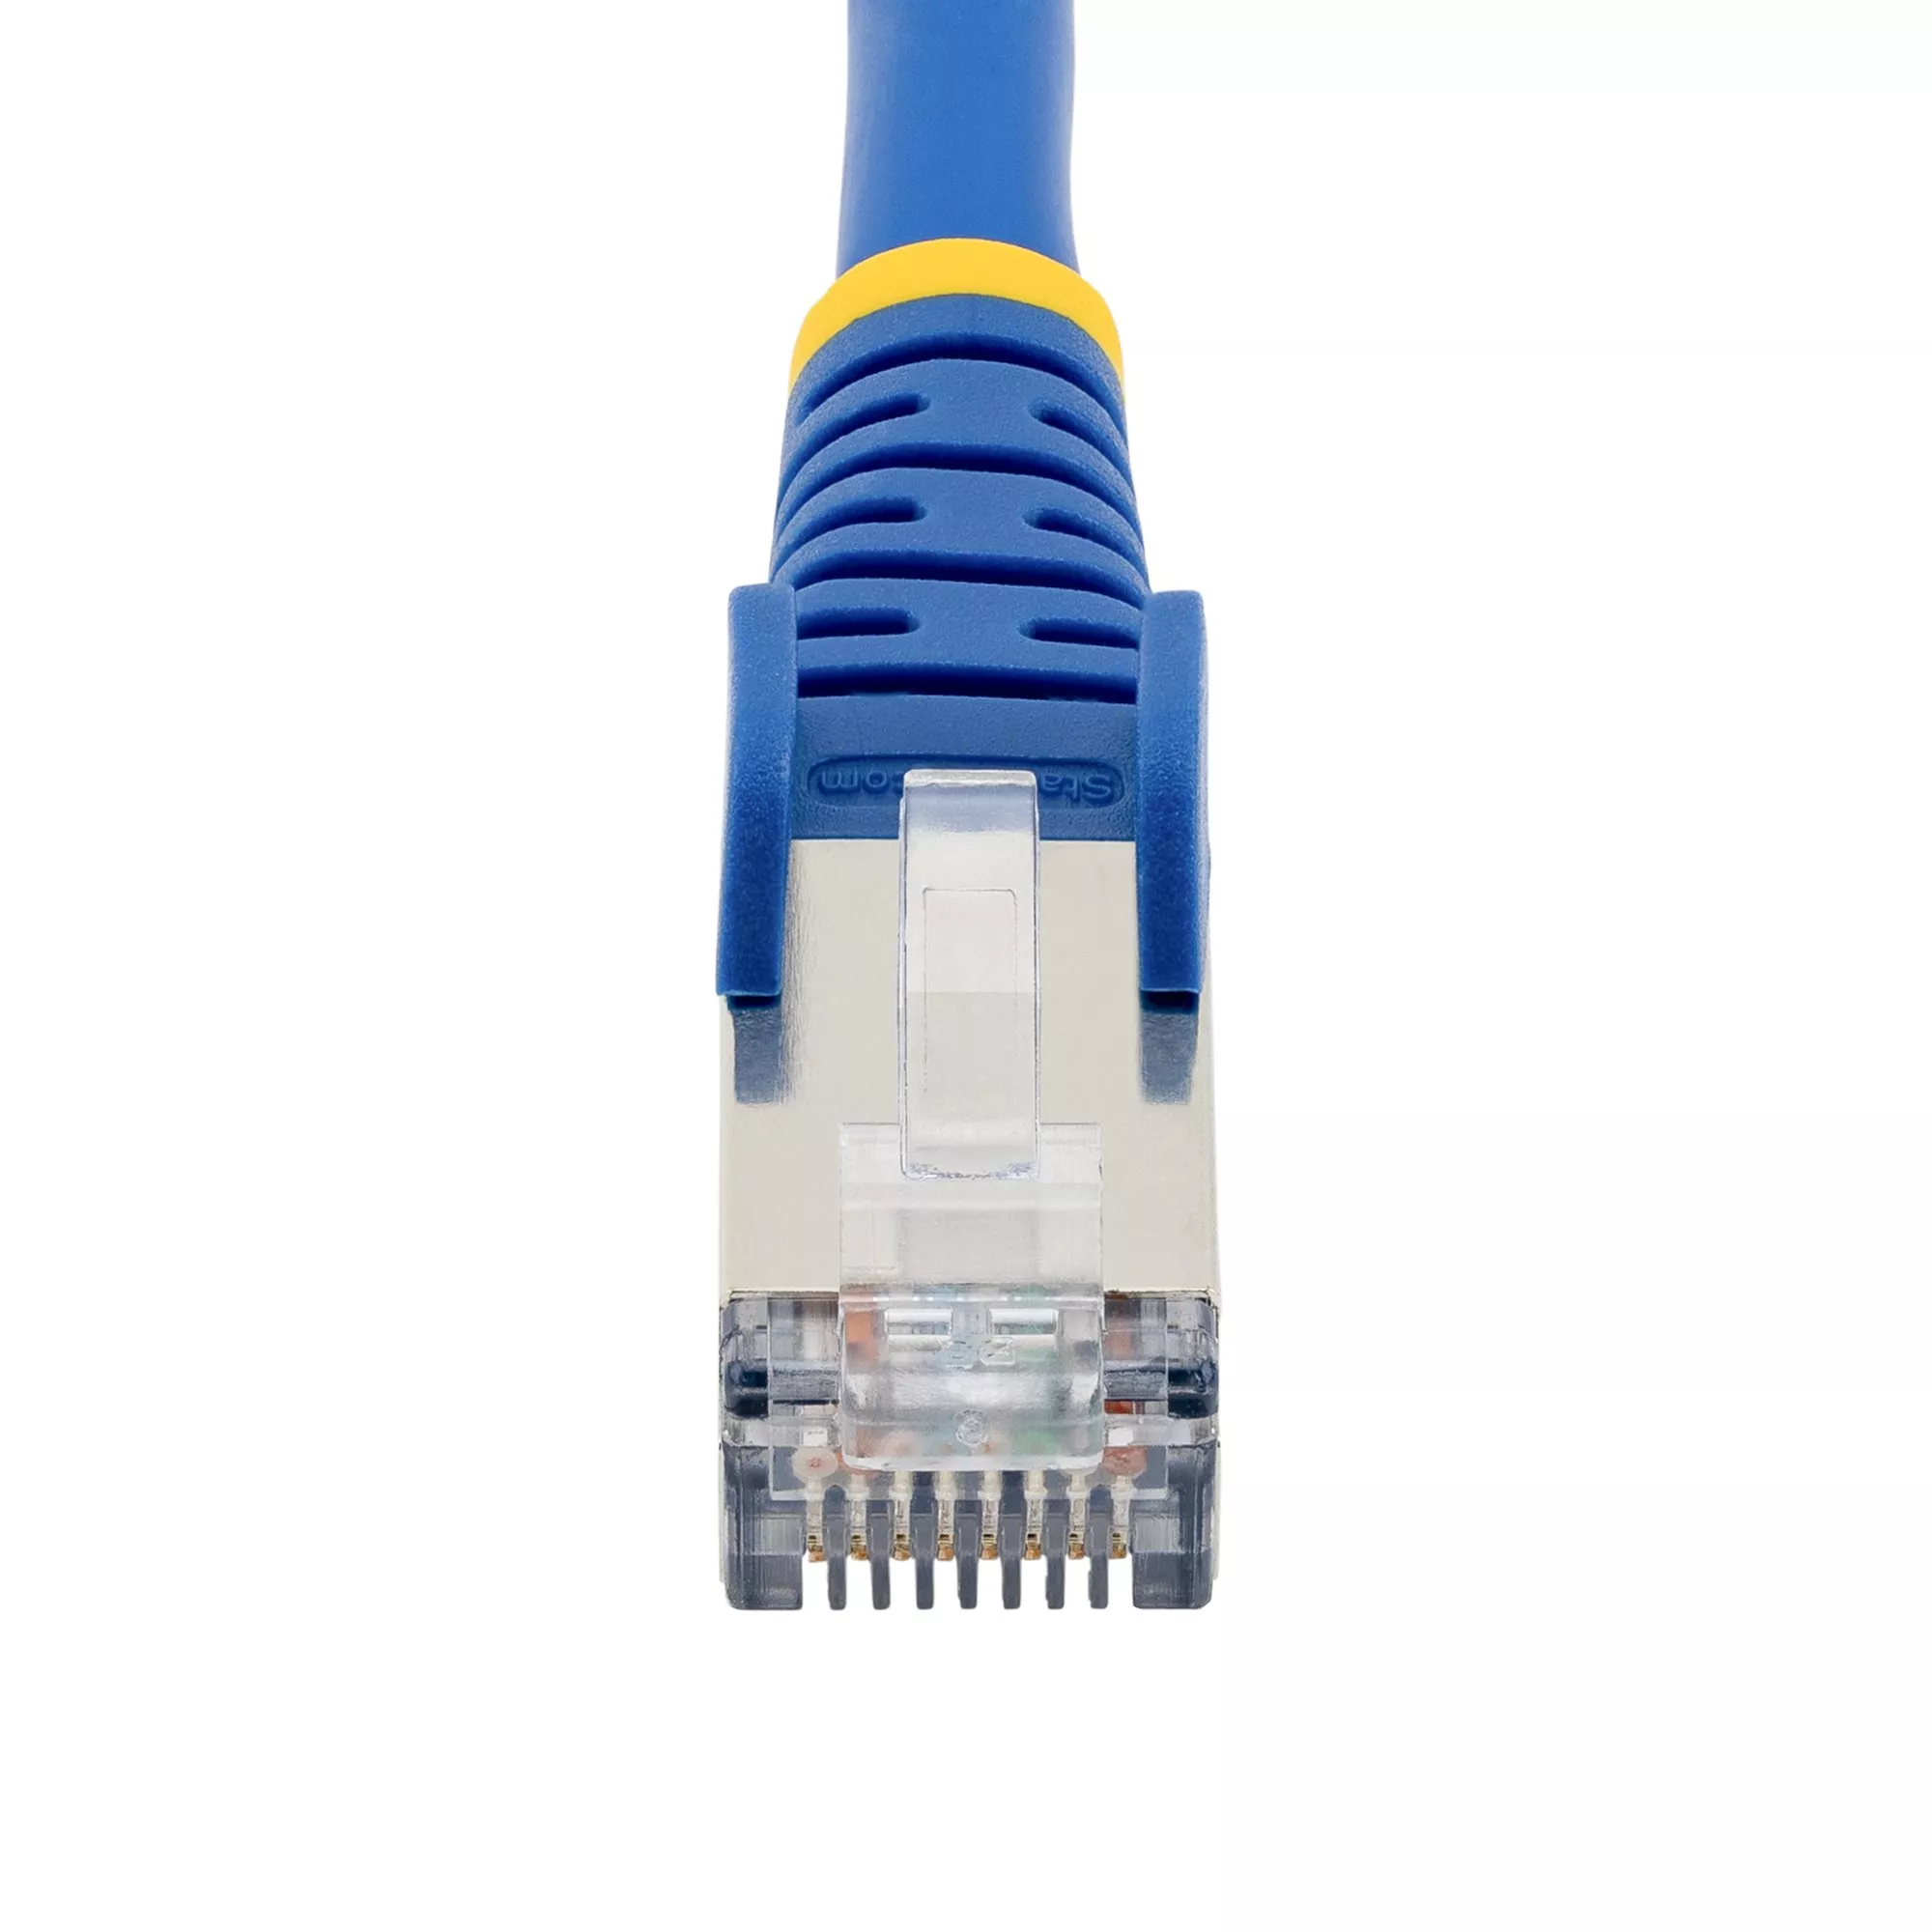 Vente StarTech.com Câble Ethernet CAT6a 10m - Low Smoke StarTech.com au meilleur prix - visuel 4